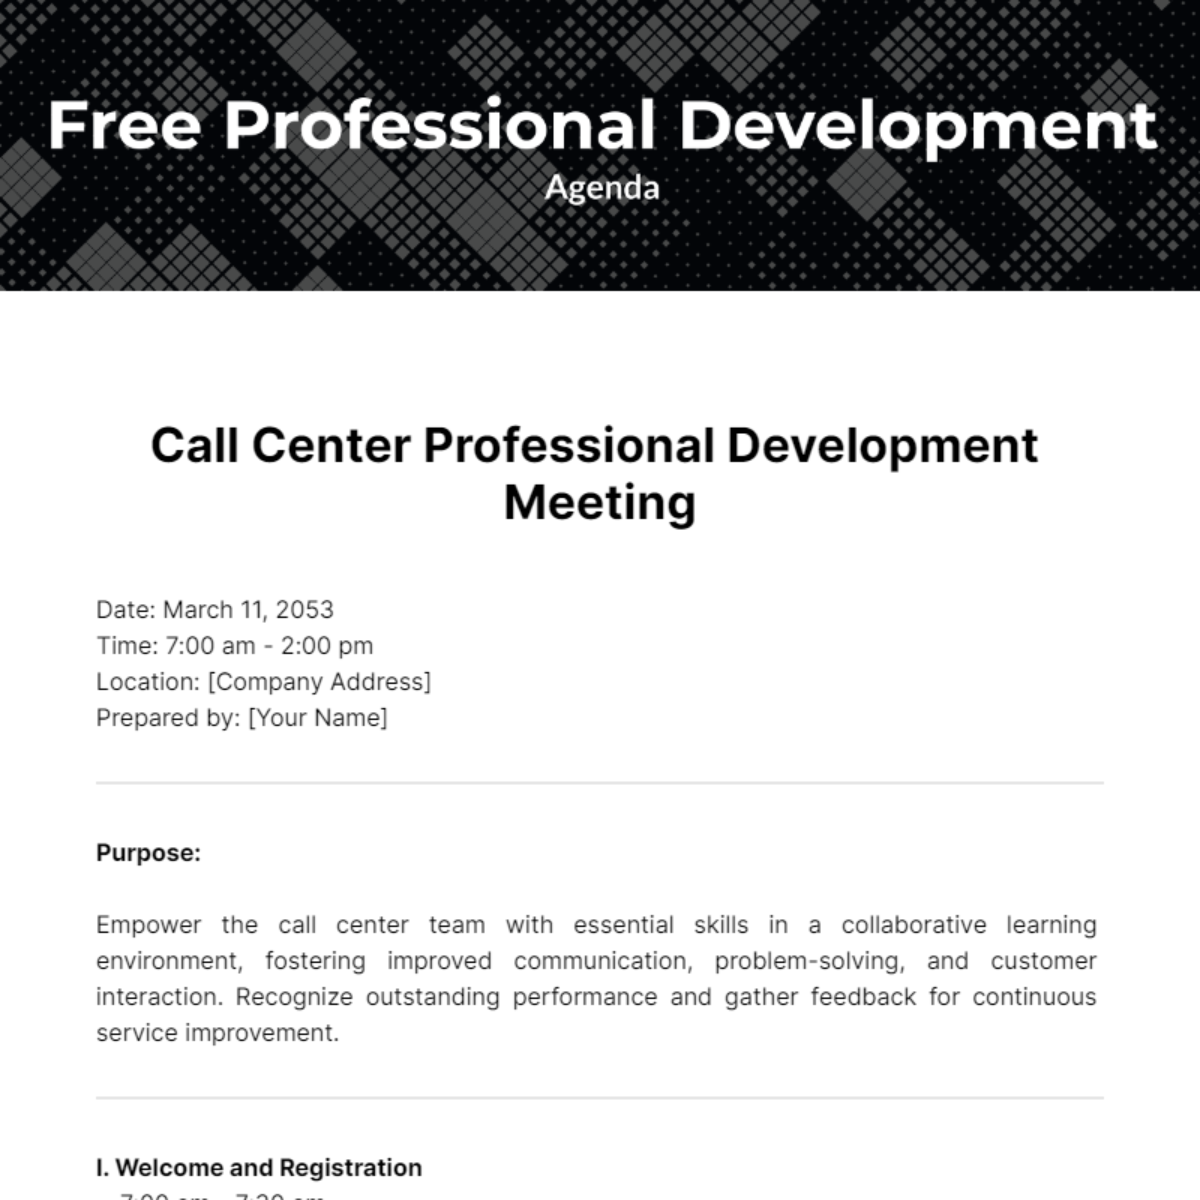 Free Professional Development Agenda Template